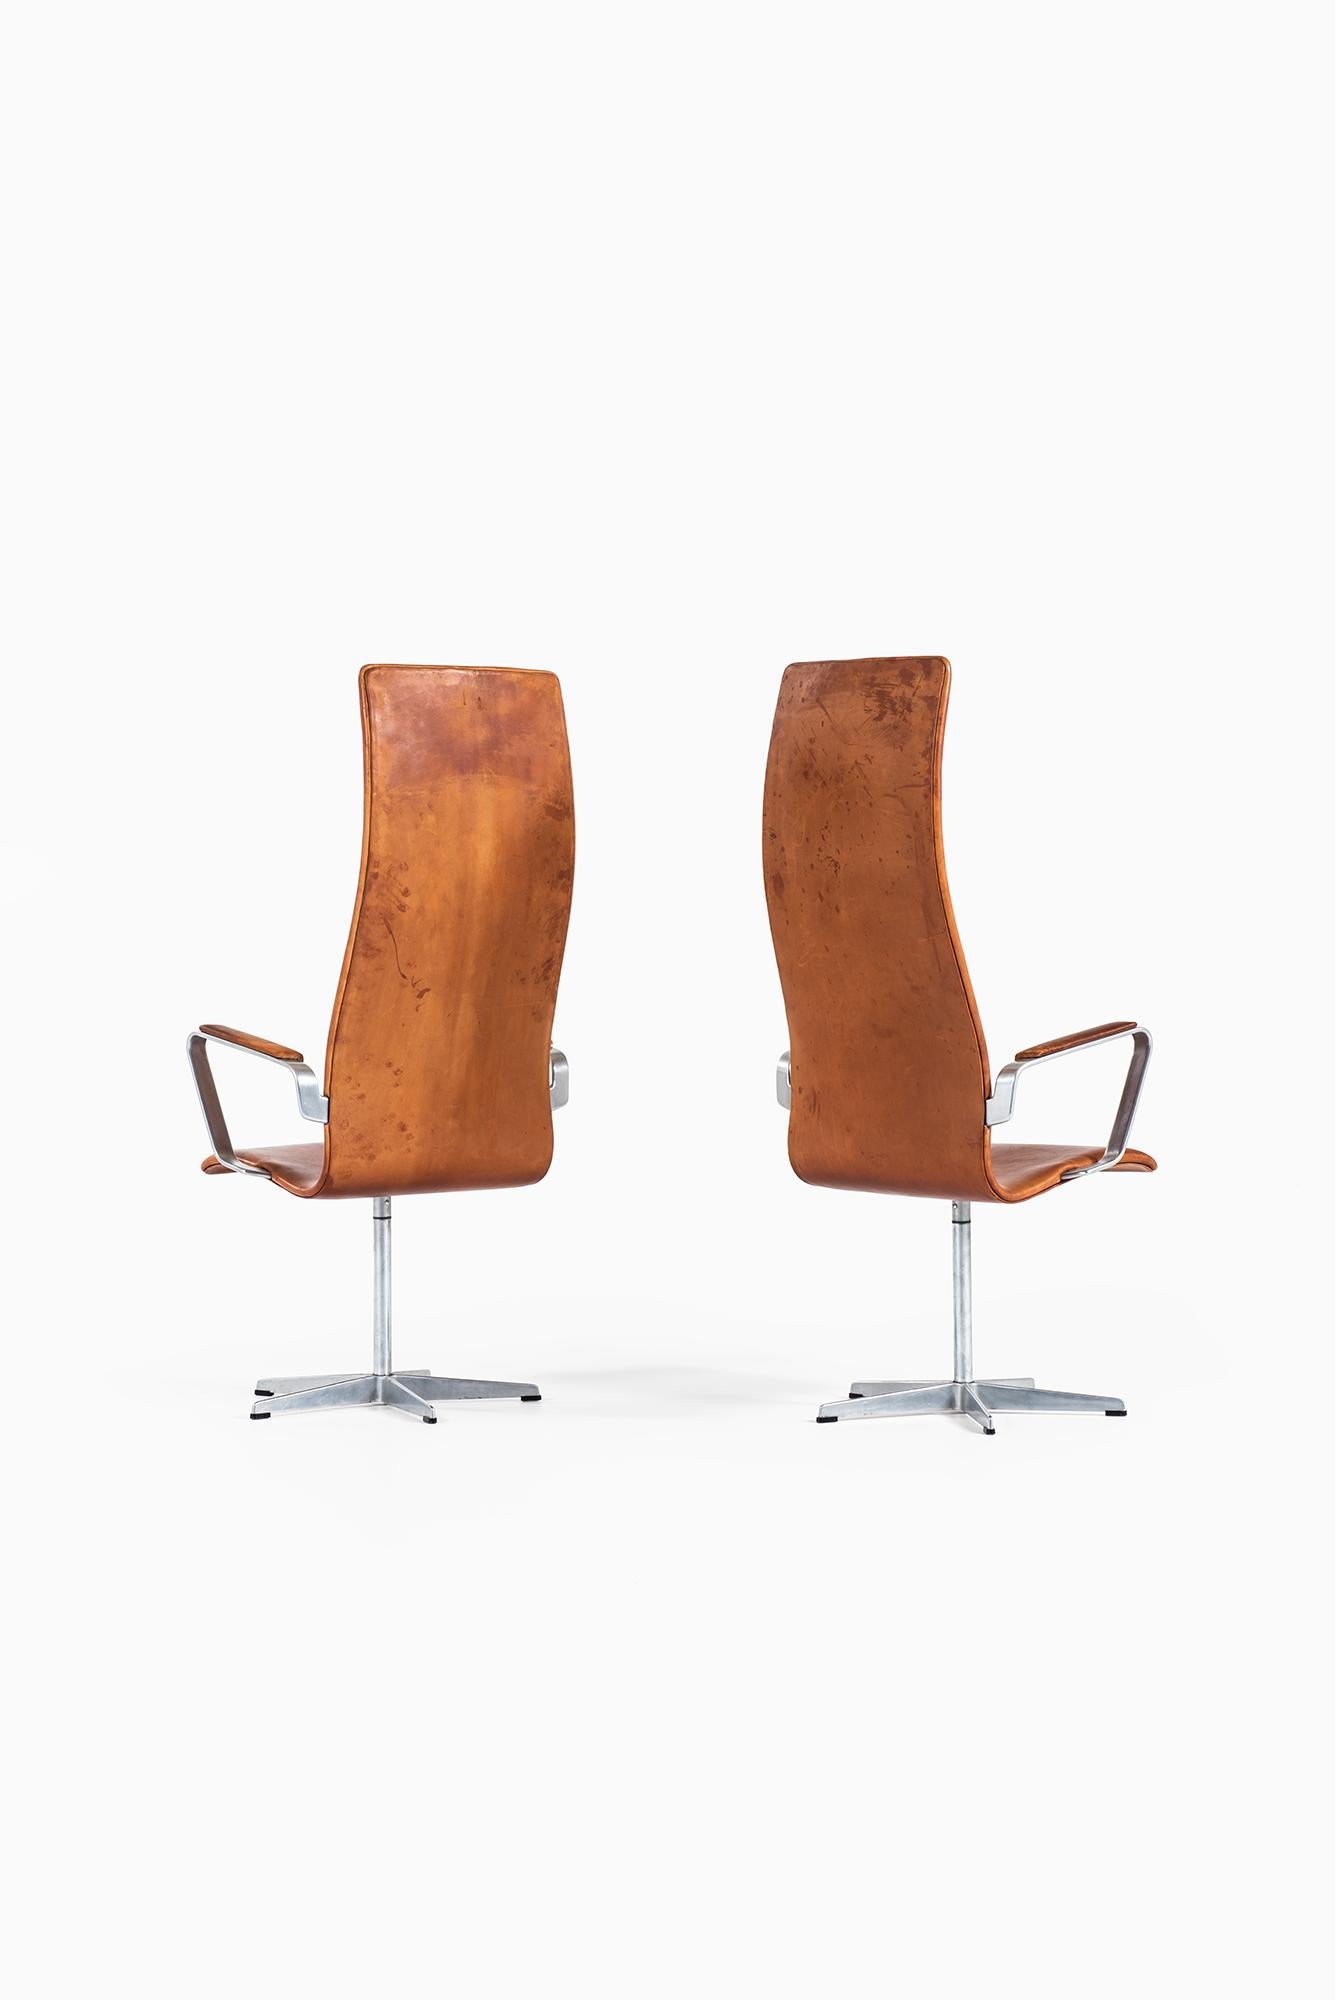 Steel Arne Jacobsen Oxford Chairs Model 3272 by Fritz Hansen in Denmark For Sale